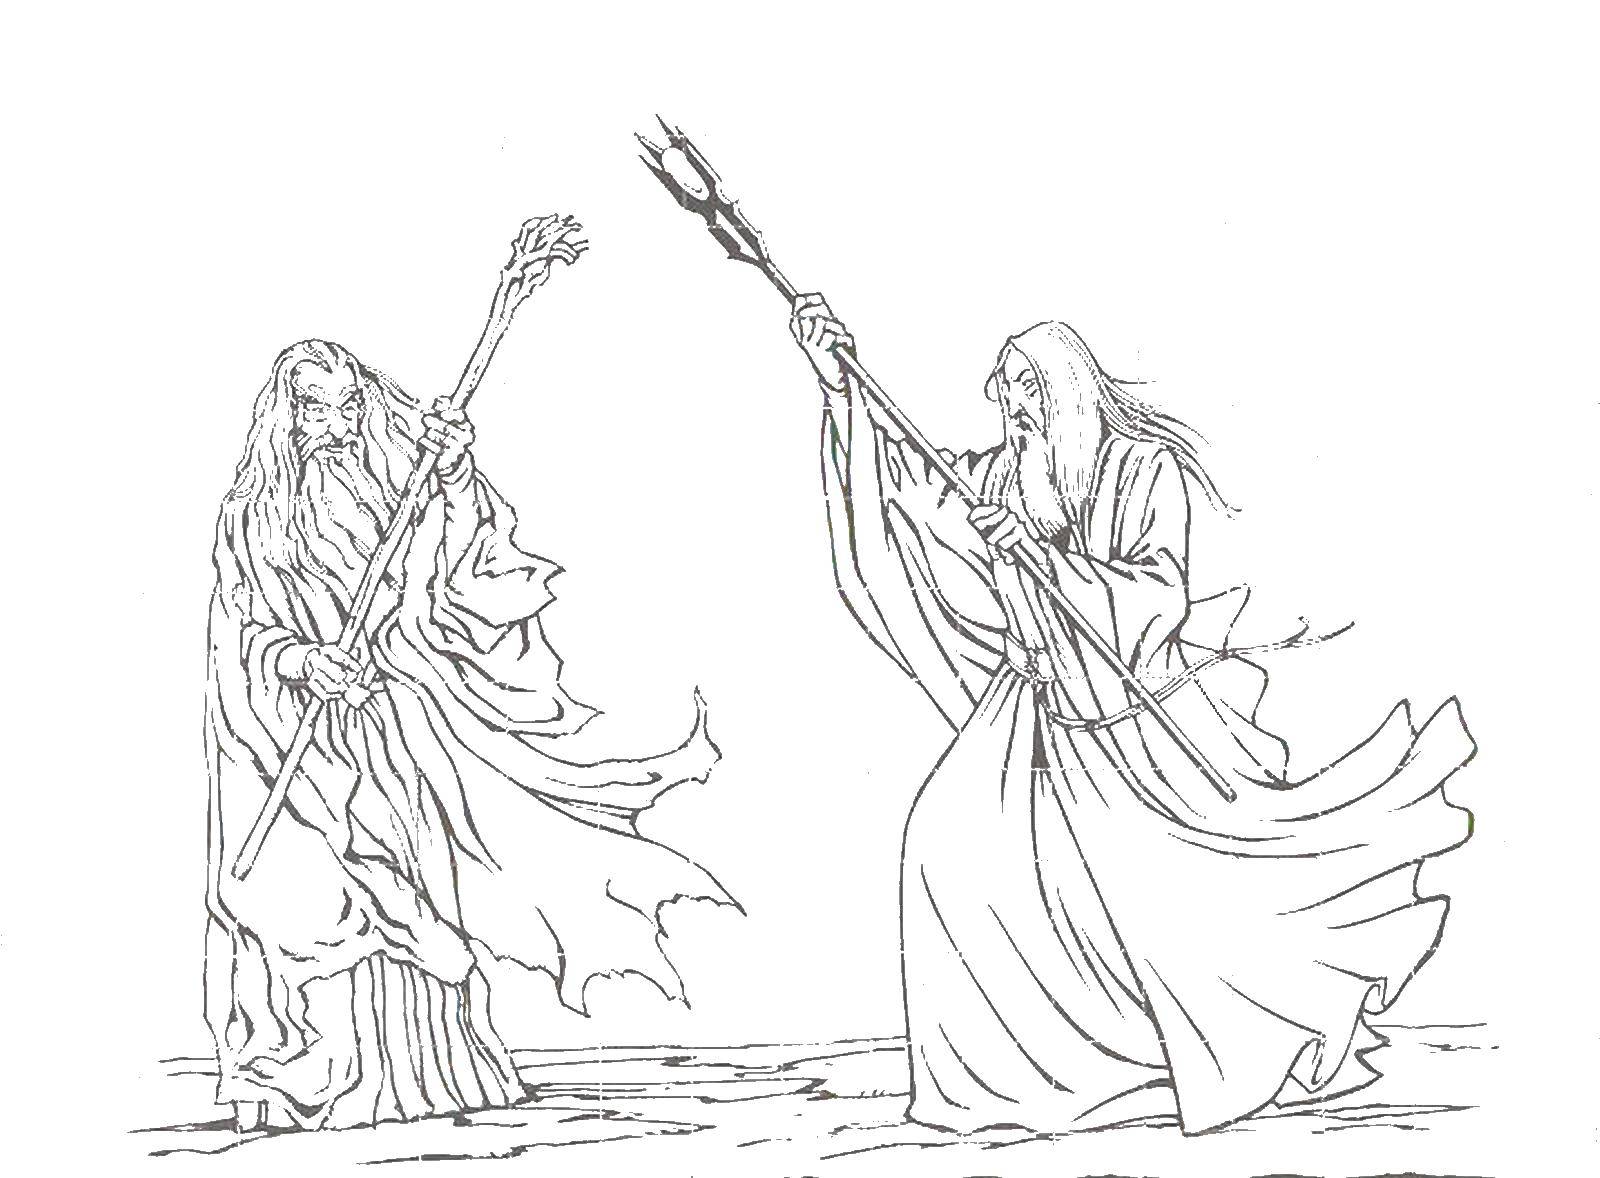 Coloring Gandalf and Saruman. Category Lord of the rings. Tags:  Gandalf, Saruman.